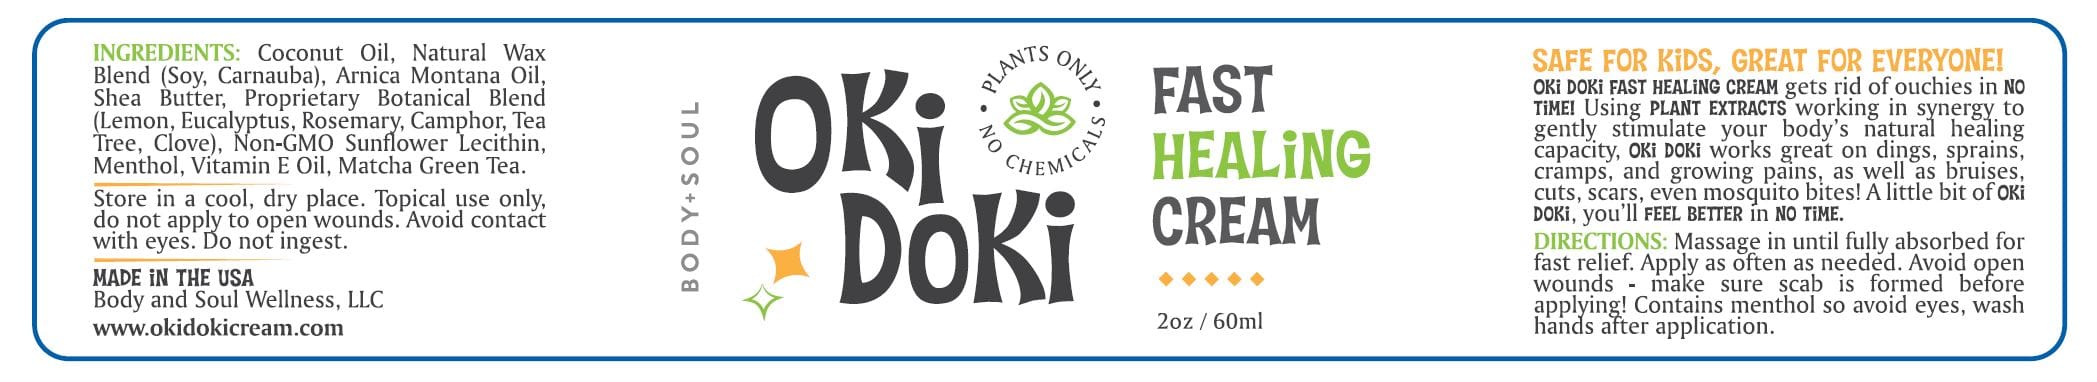 Oki Doki Fast Healing Cream